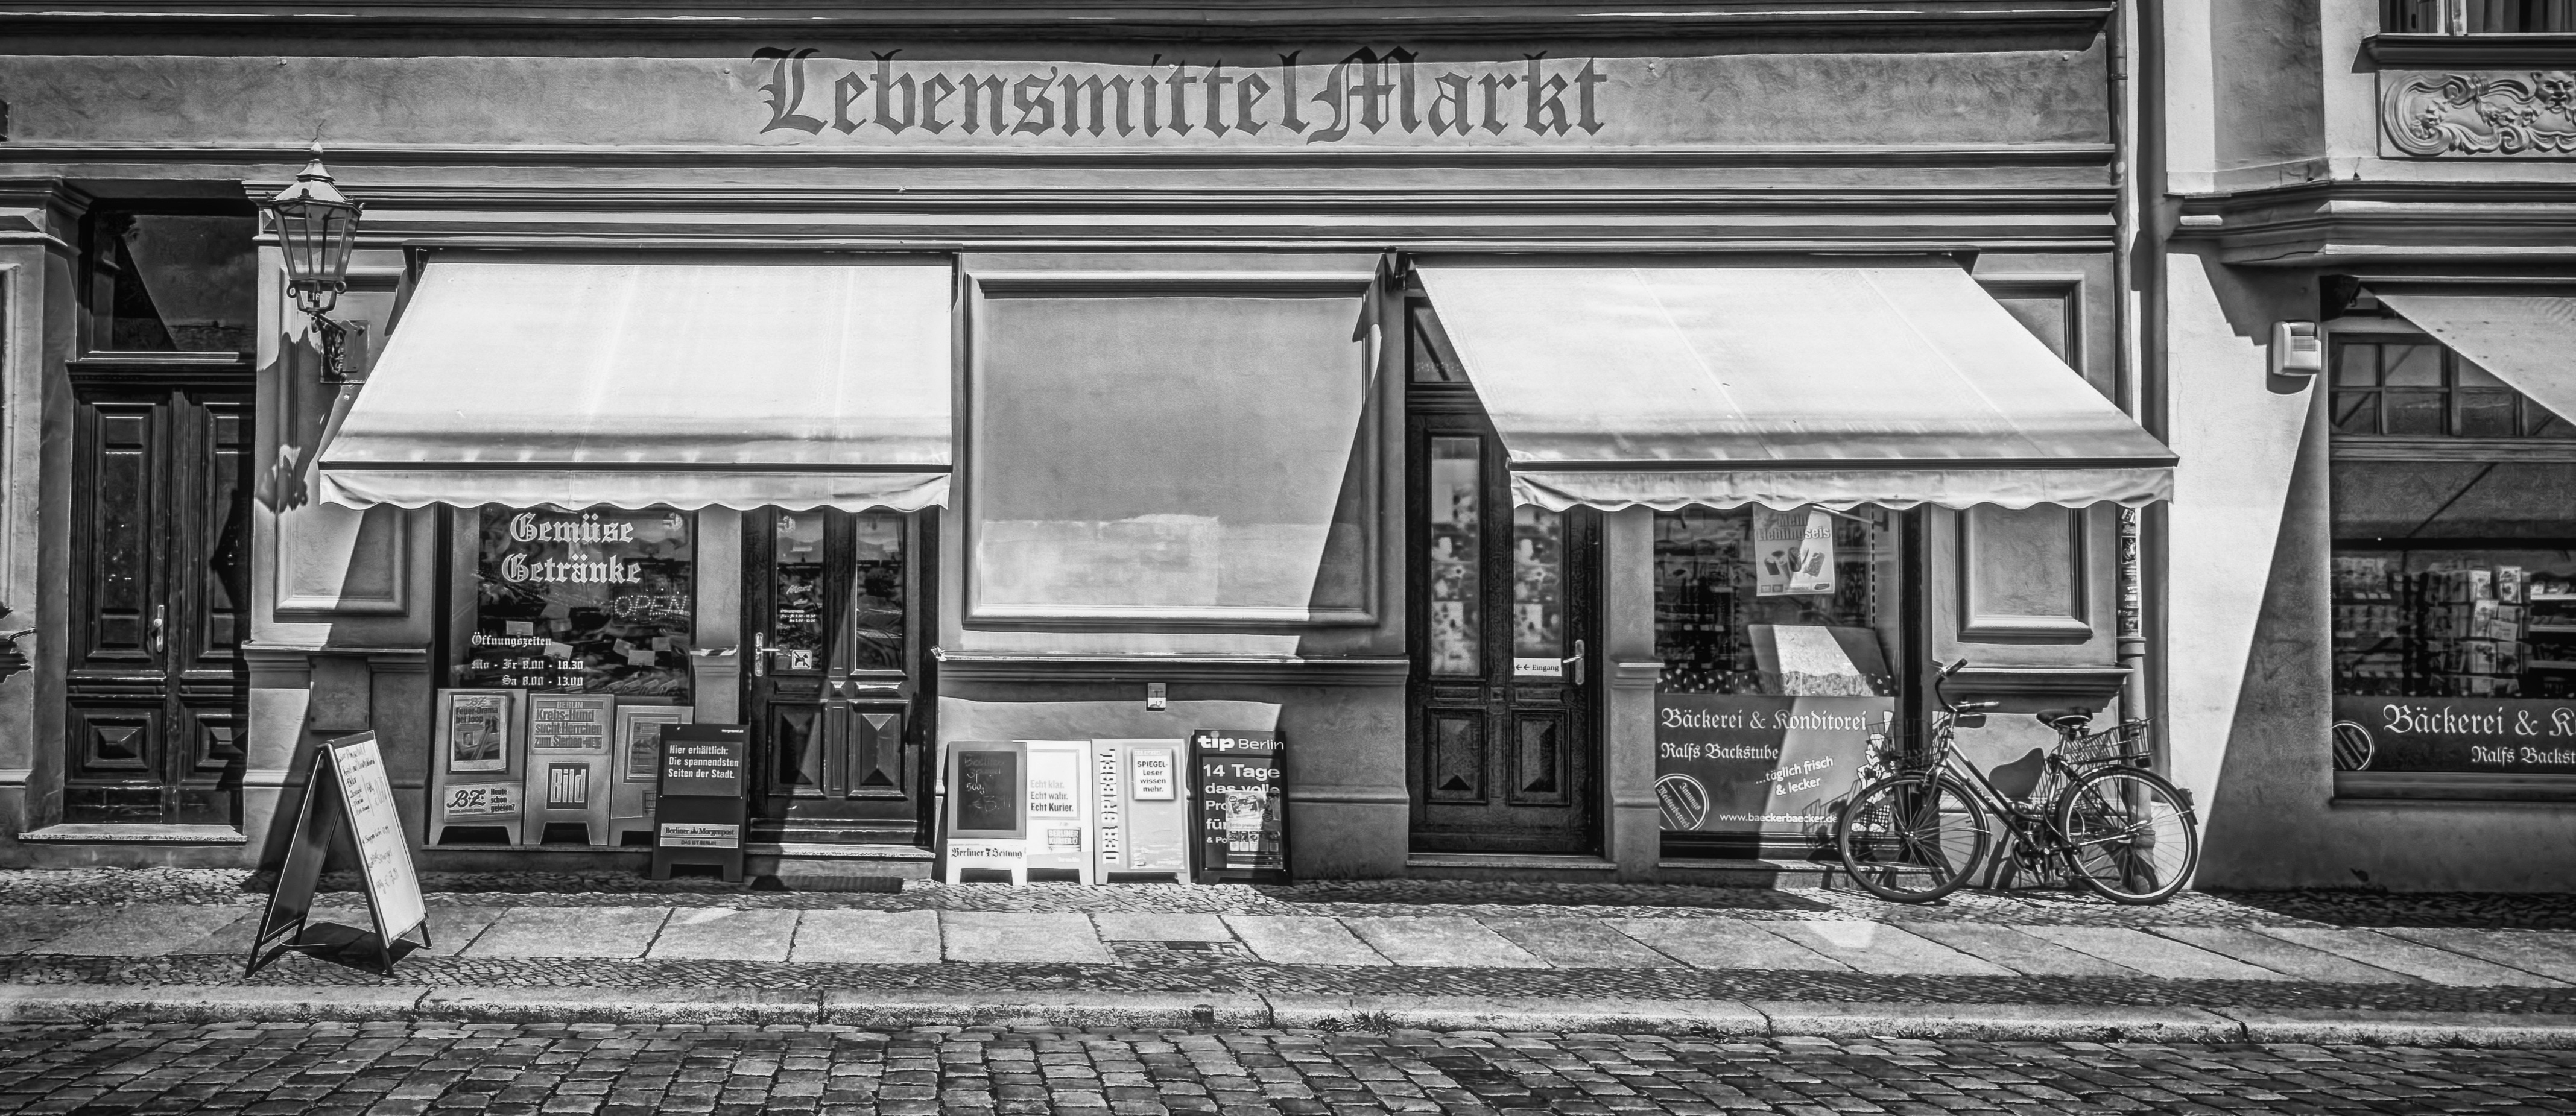 grayscale photo of lebensmitte market